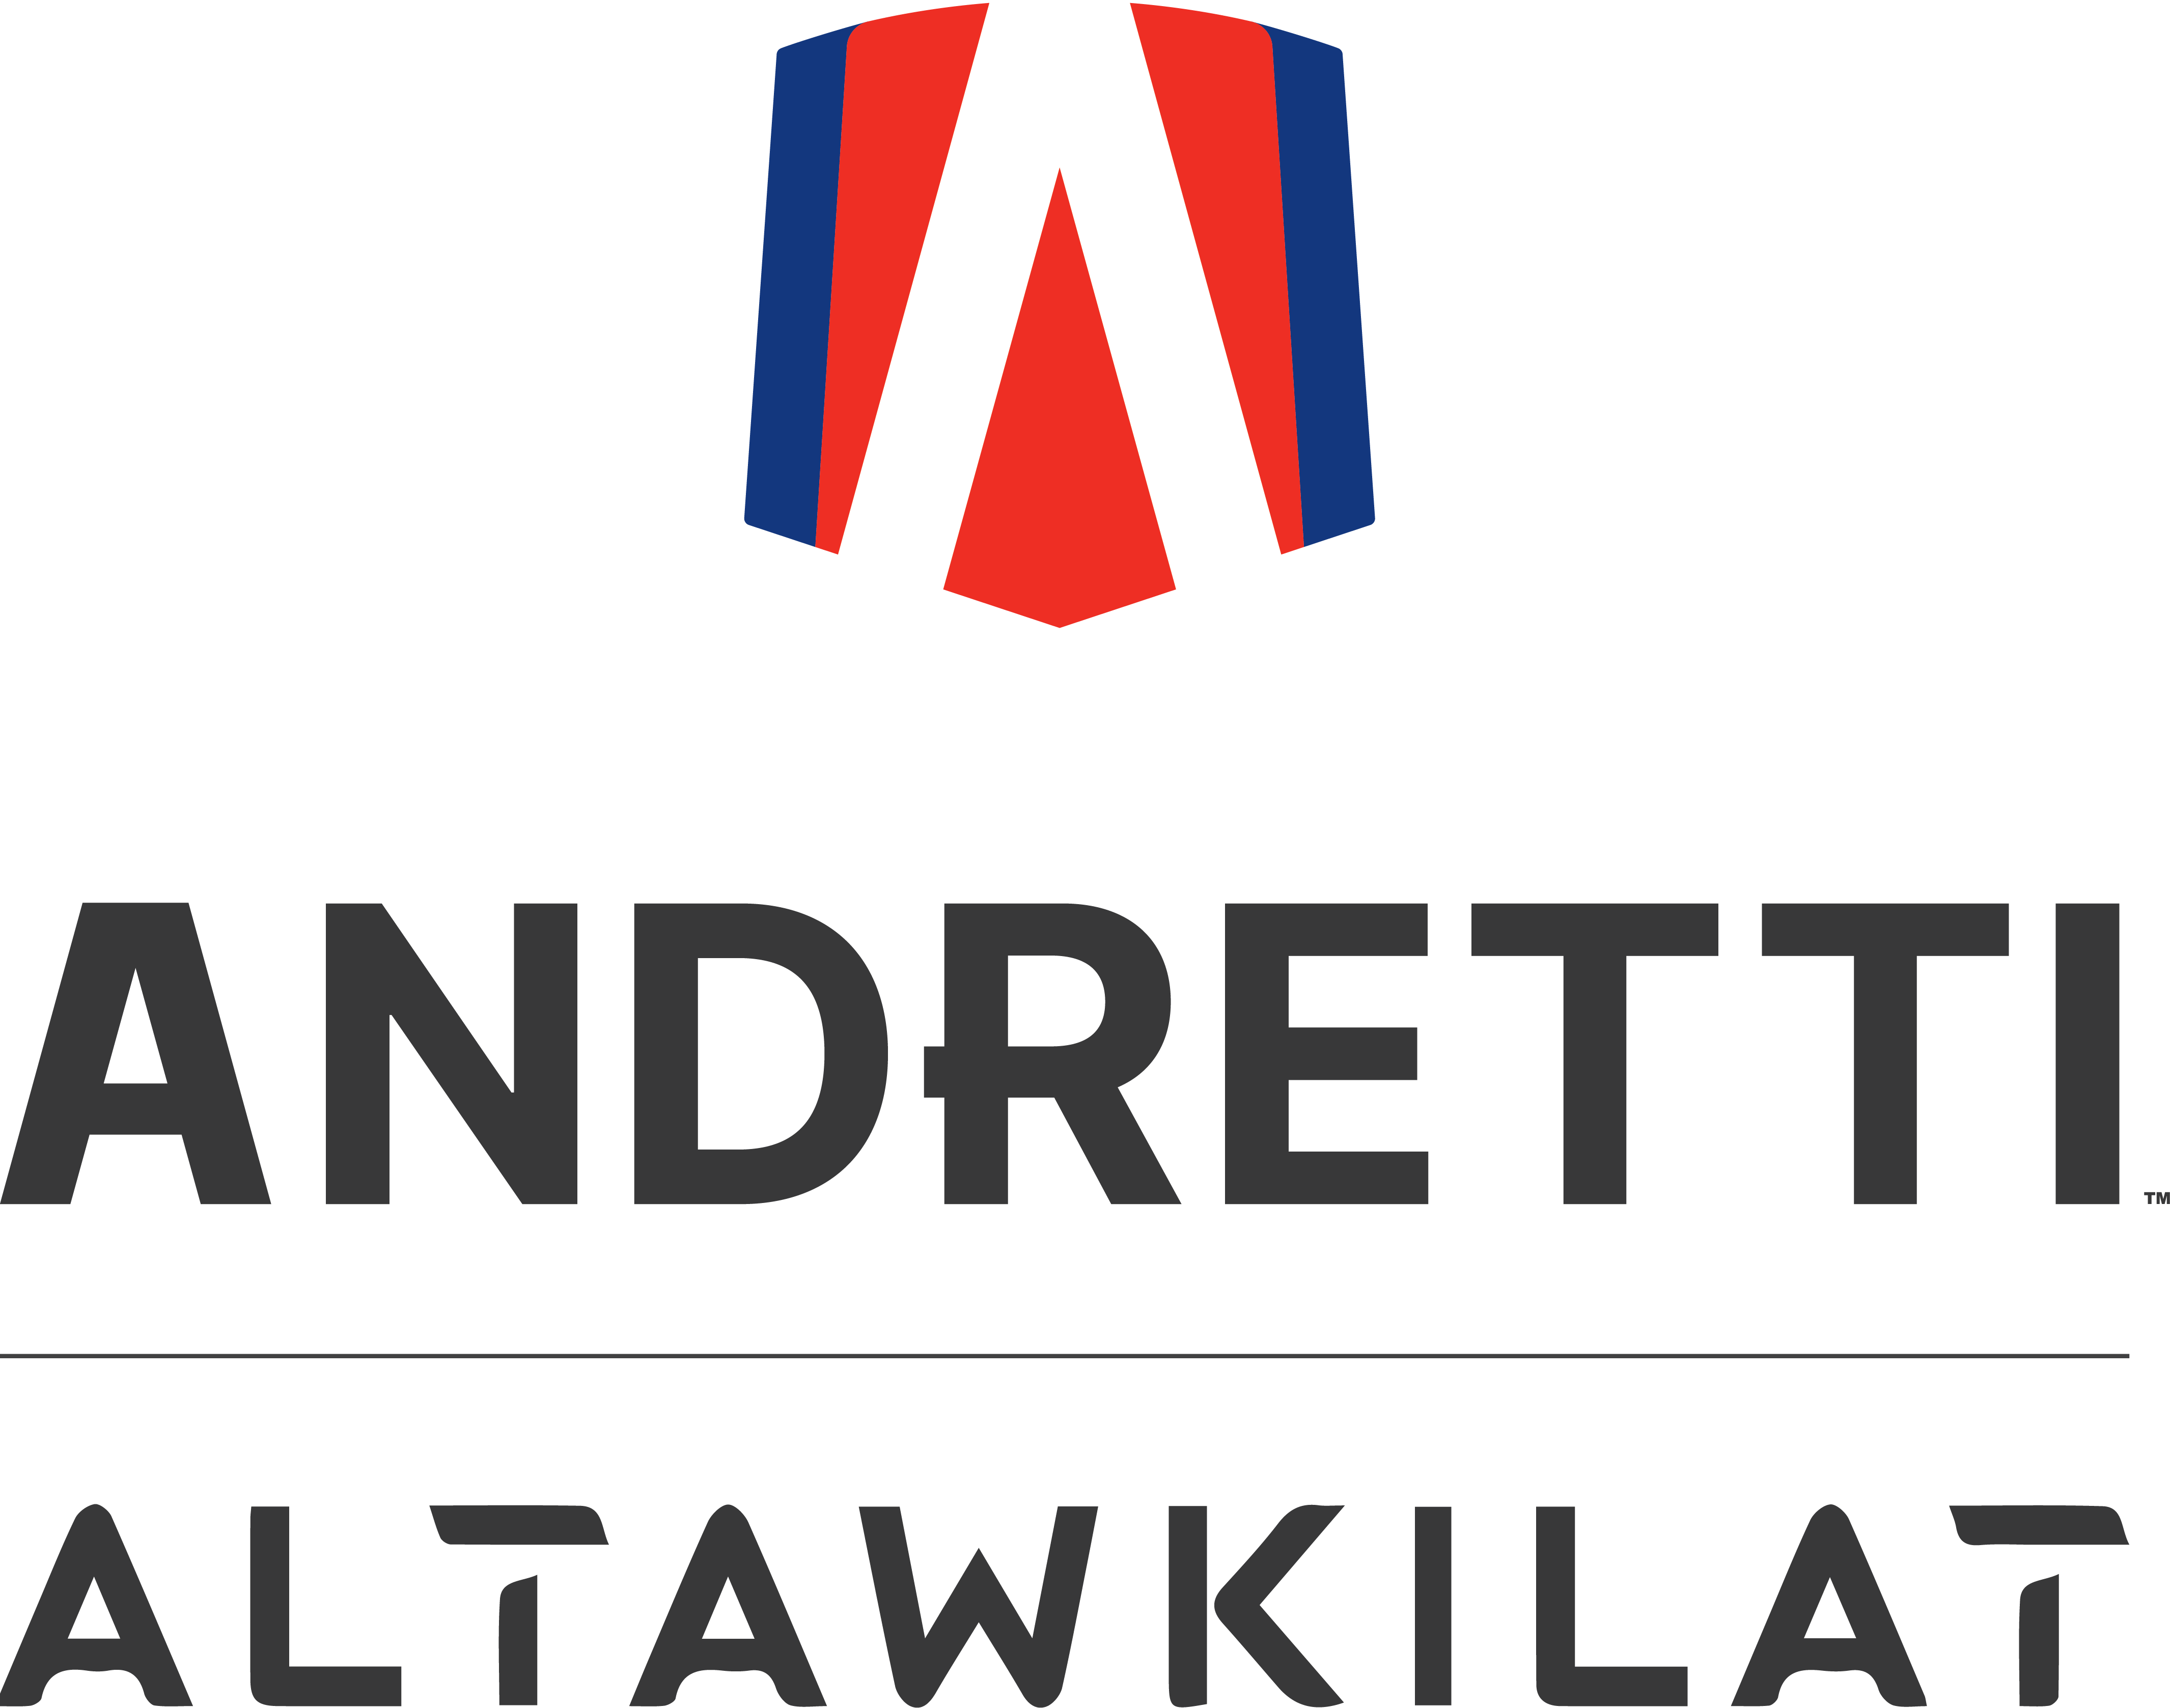 Andretti Extreme E team logo